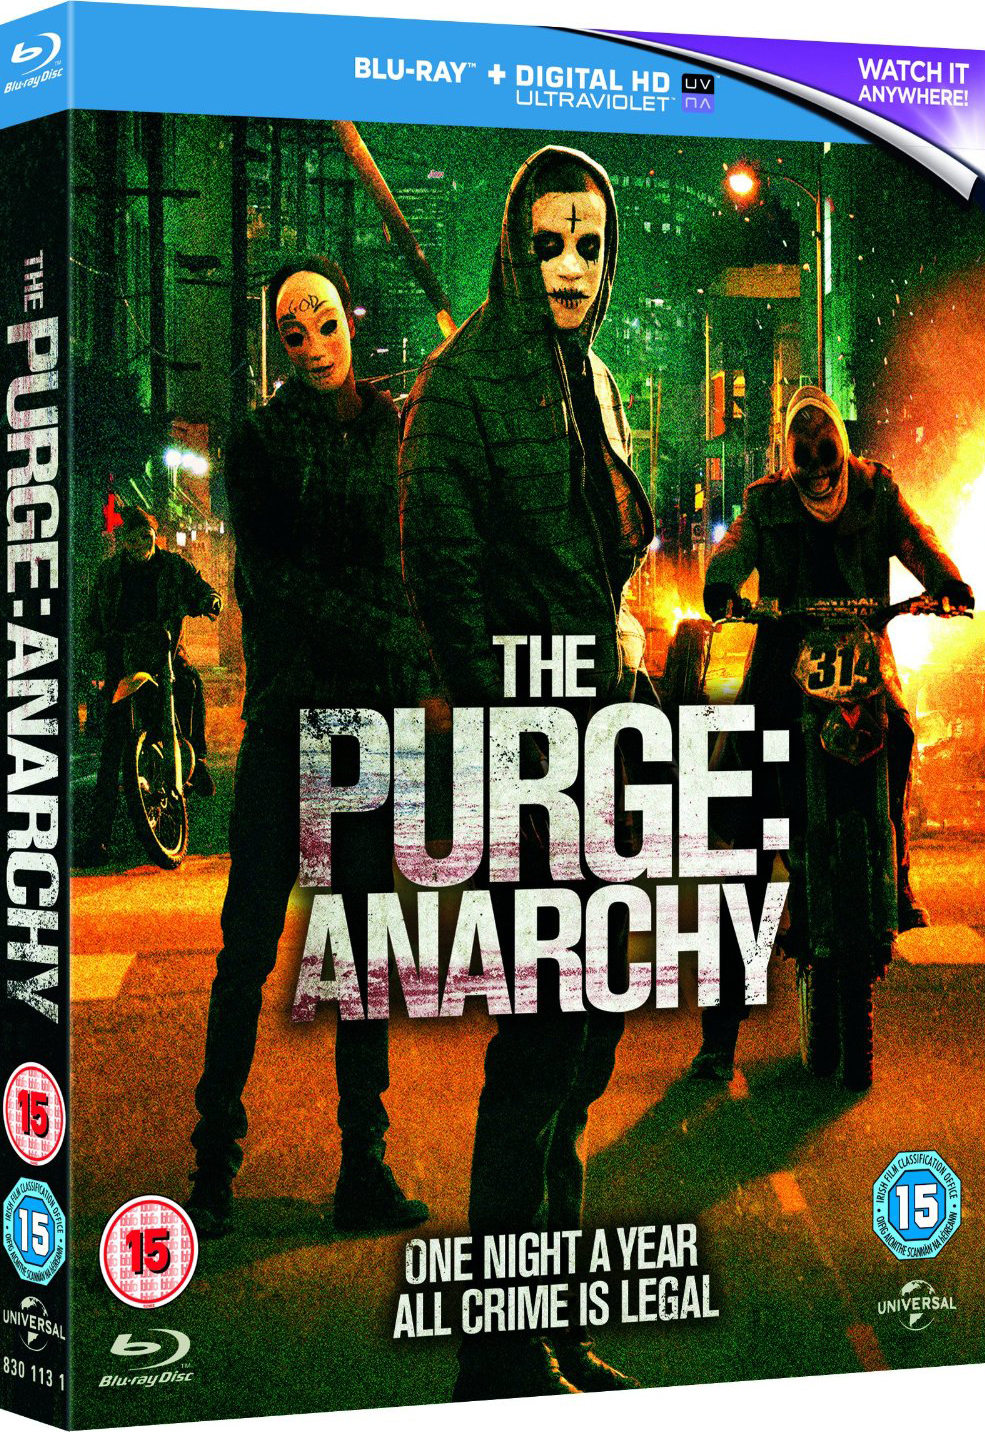 Purge, The: Anarchy